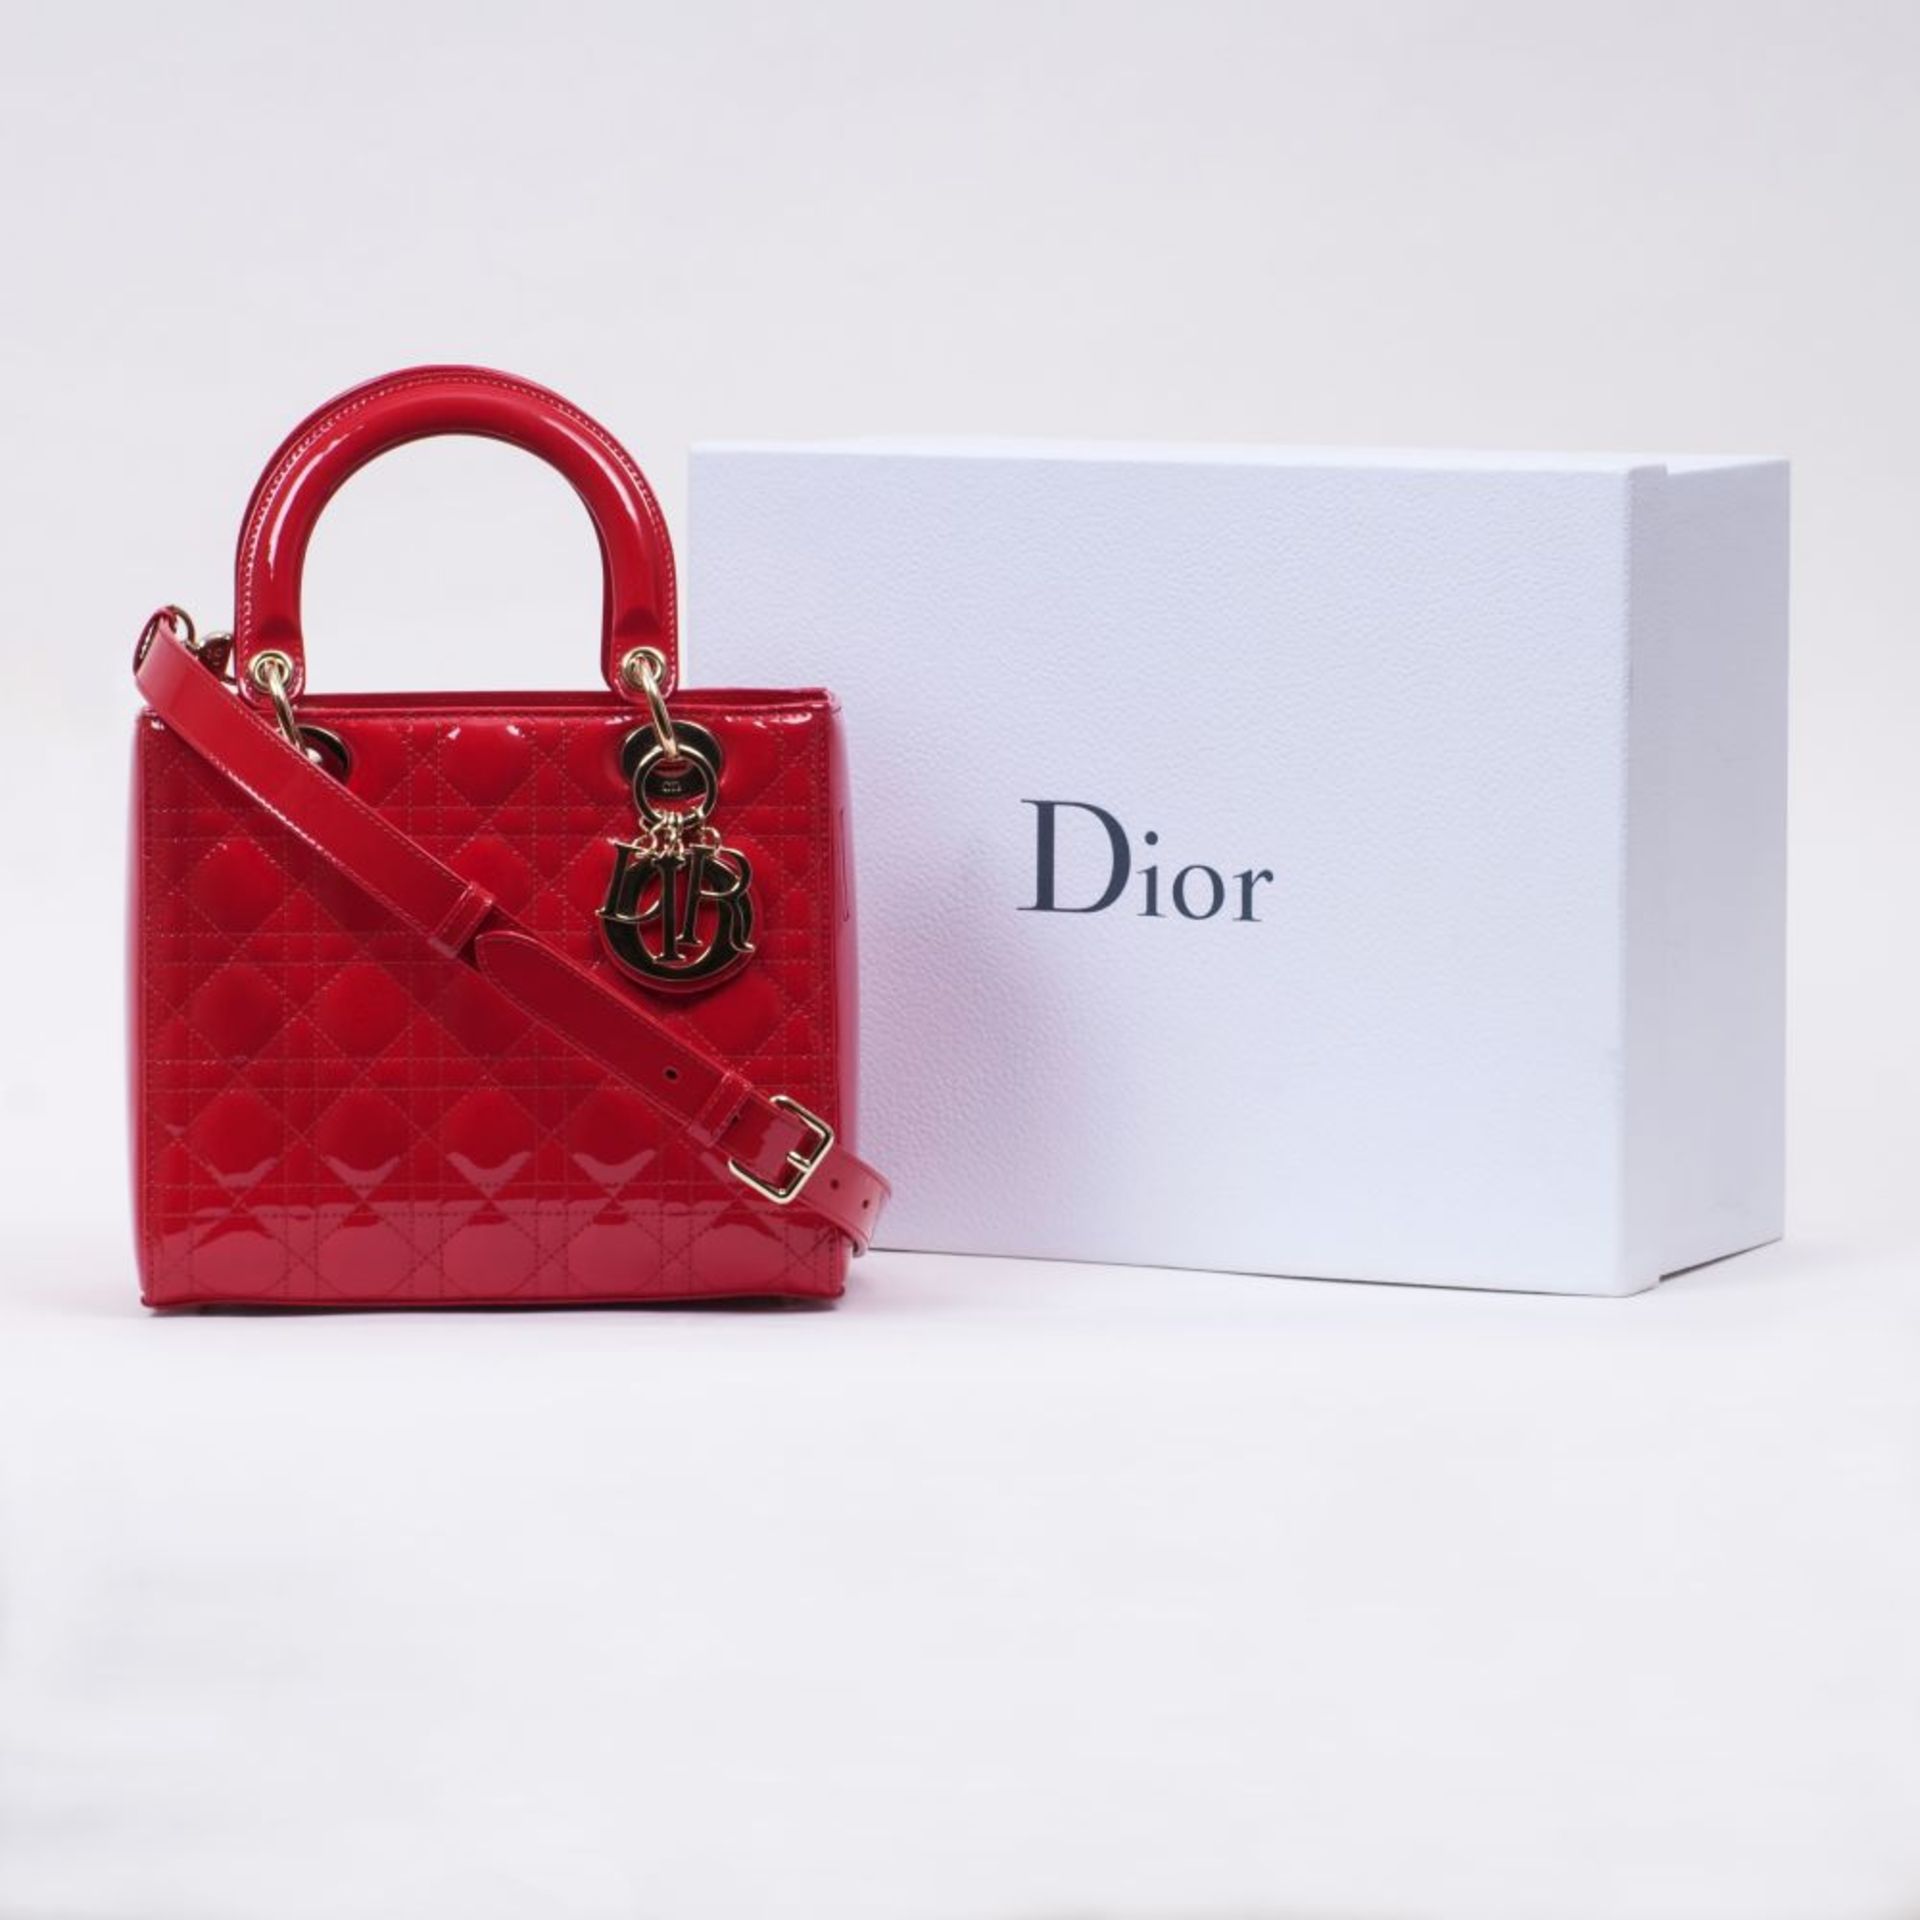 Christian Dior. Lady Dior Bag Kirschrot. - Image 2 of 2